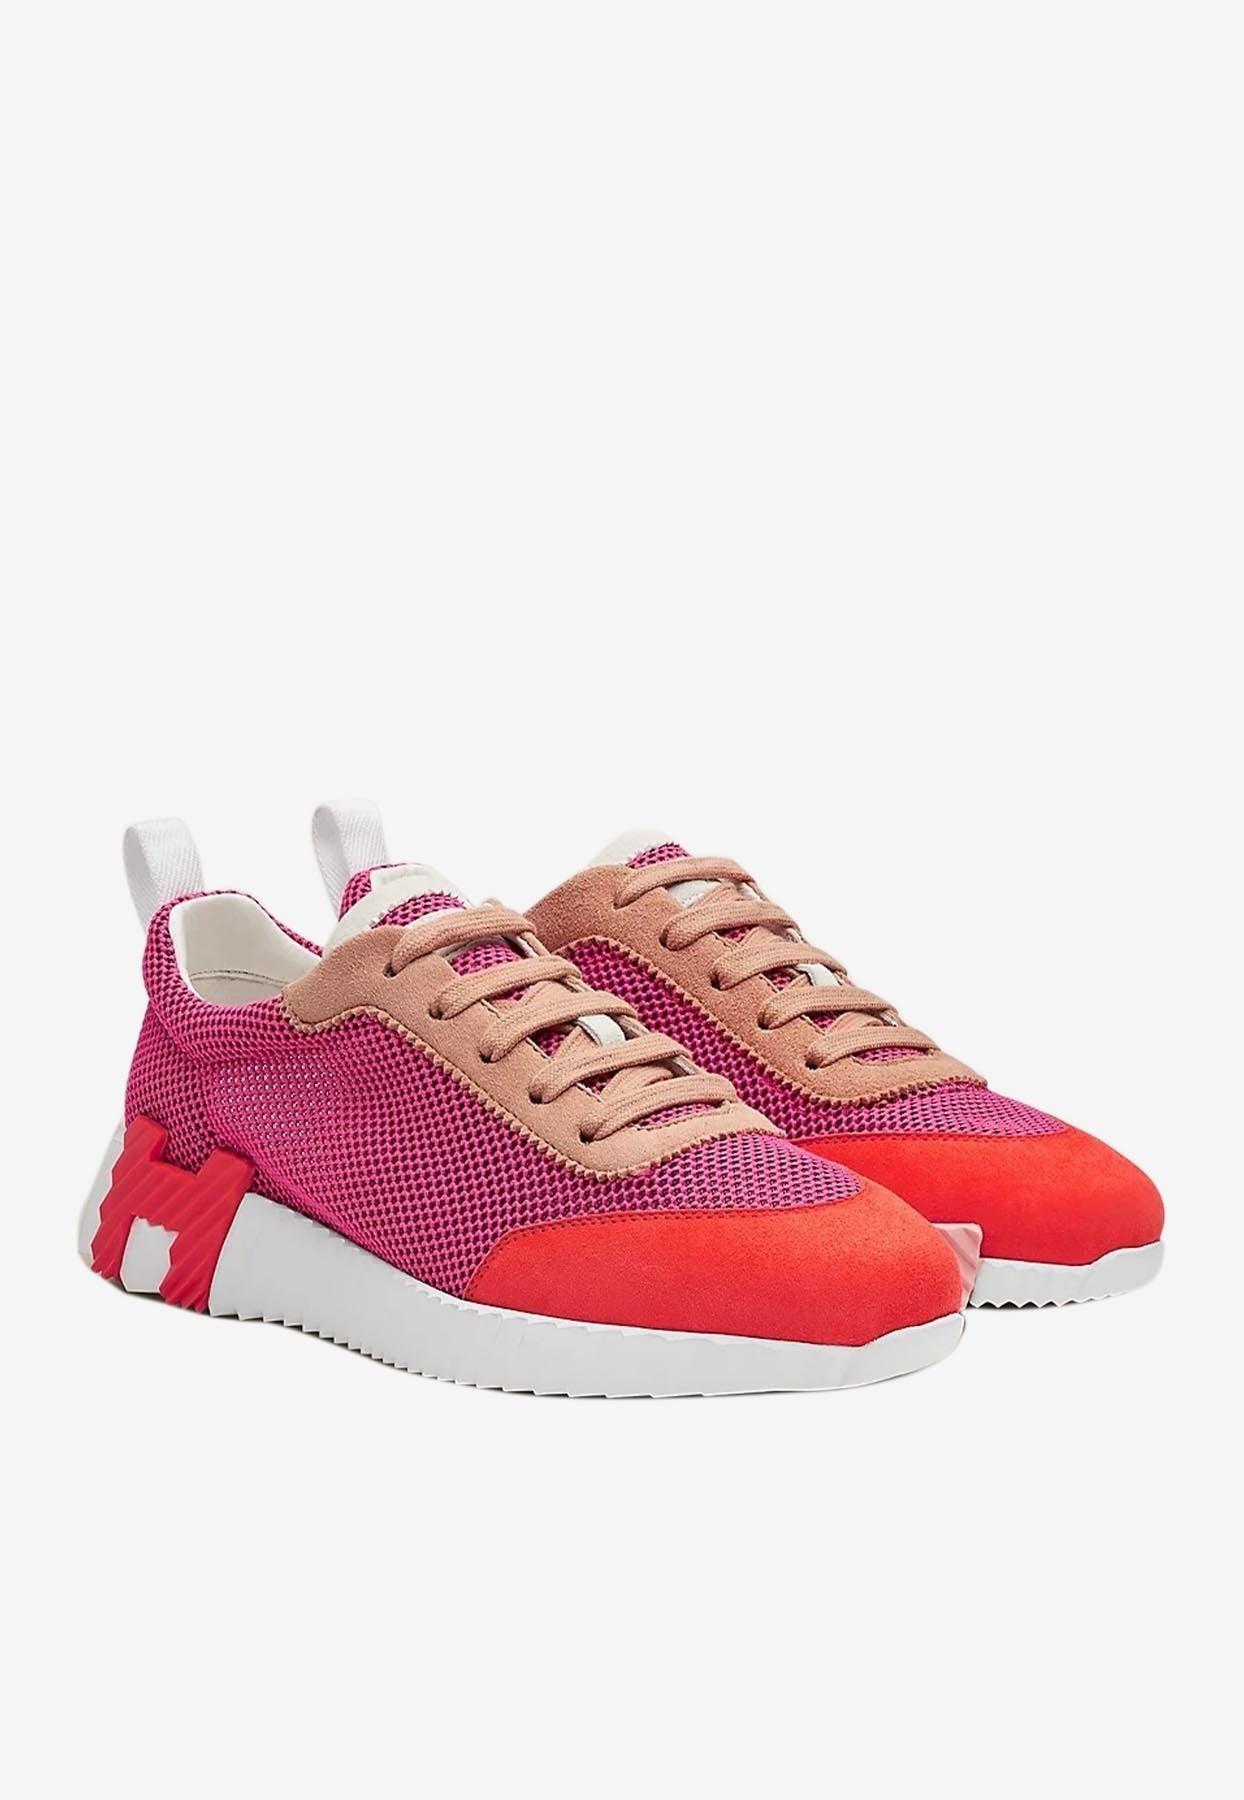 Hermès Bouncing Low-top Pink And Orange Sneakers in Red